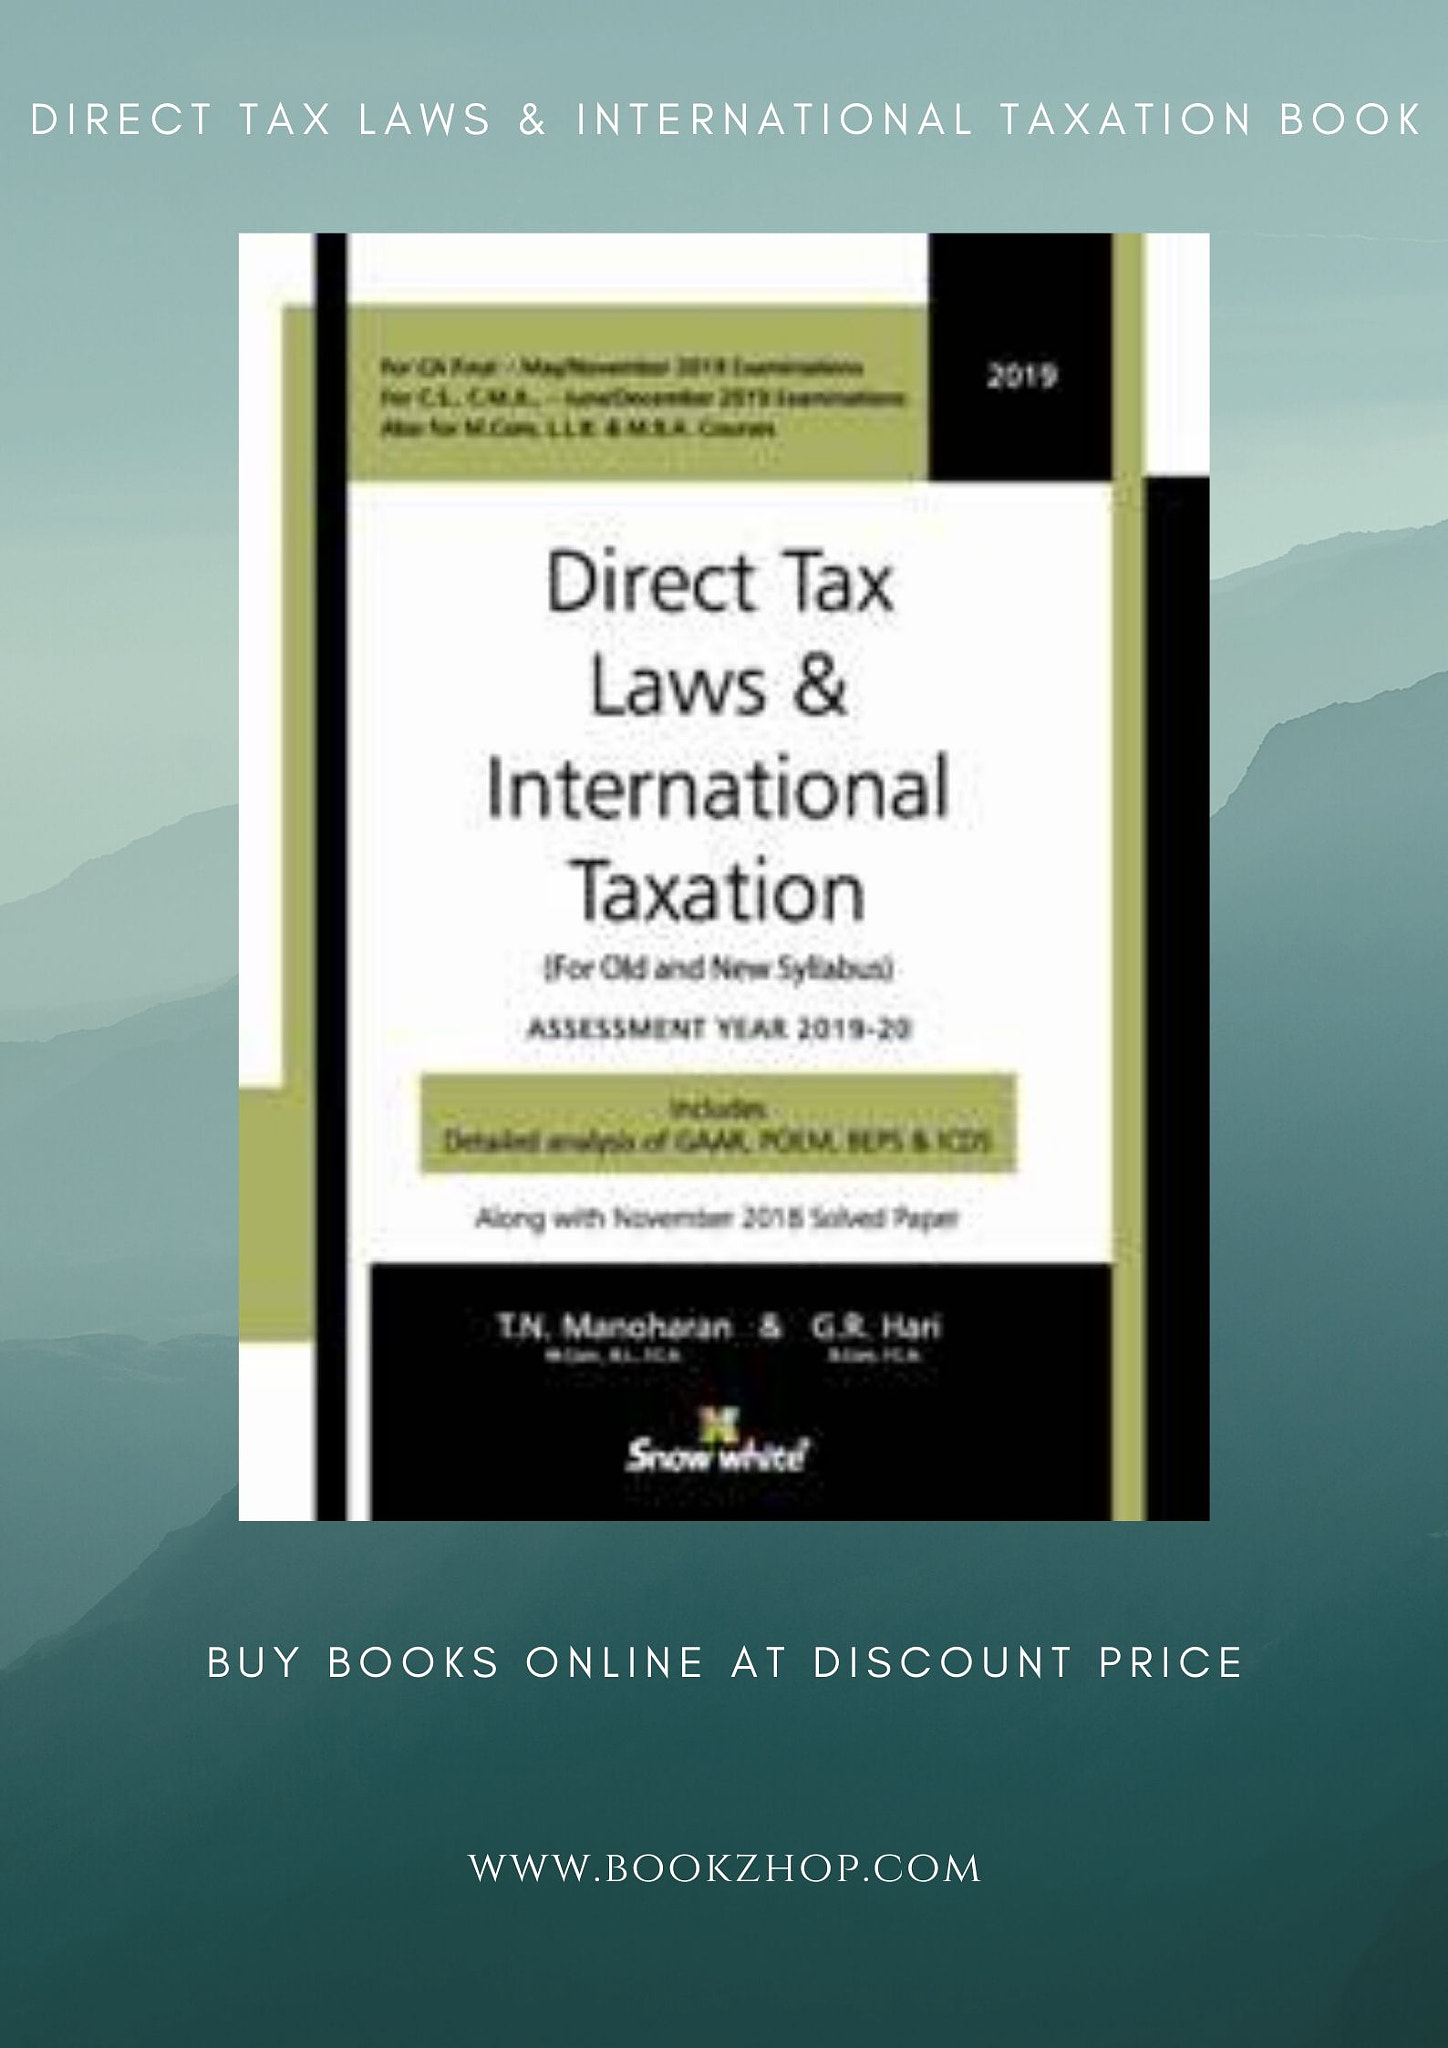 Buy Direct Tax Laws & International Taxation Book